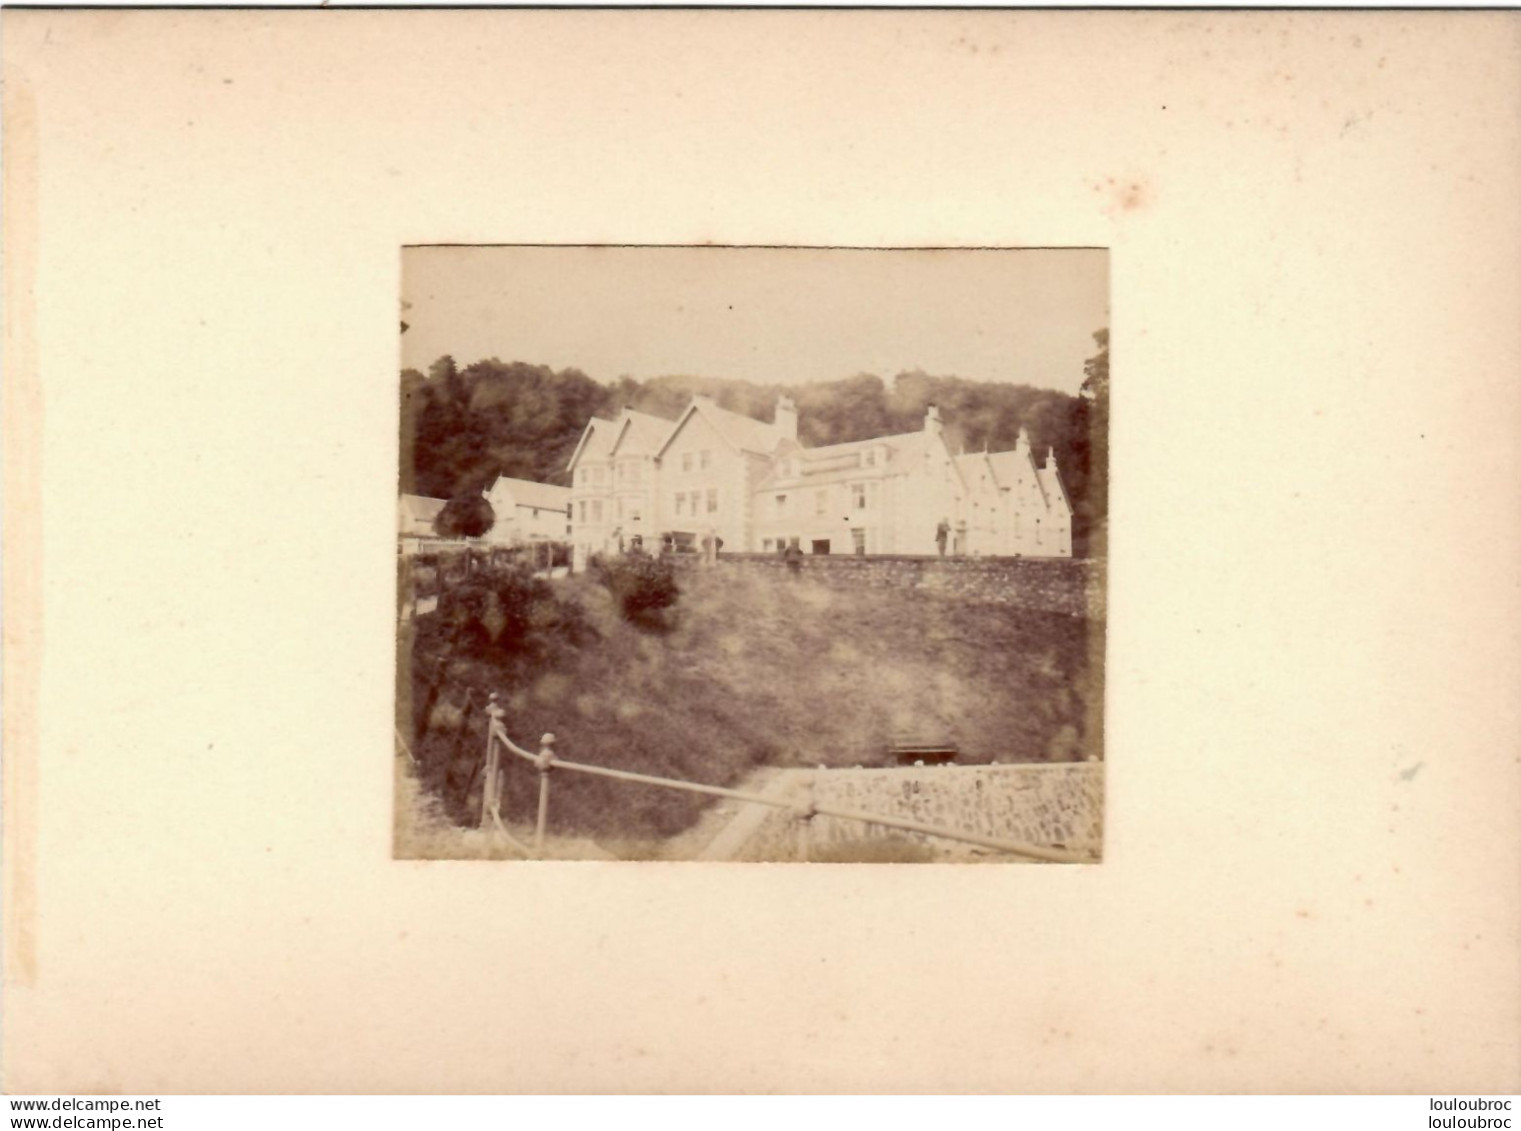 LAC LOMOND ECOSSE HOTEL D'INVERSNAID FIN 19e PHOTO ORIGINALE DE 8.50X7 CM COLLEE SUR CARTON 18X13CM - Old (before 1900)